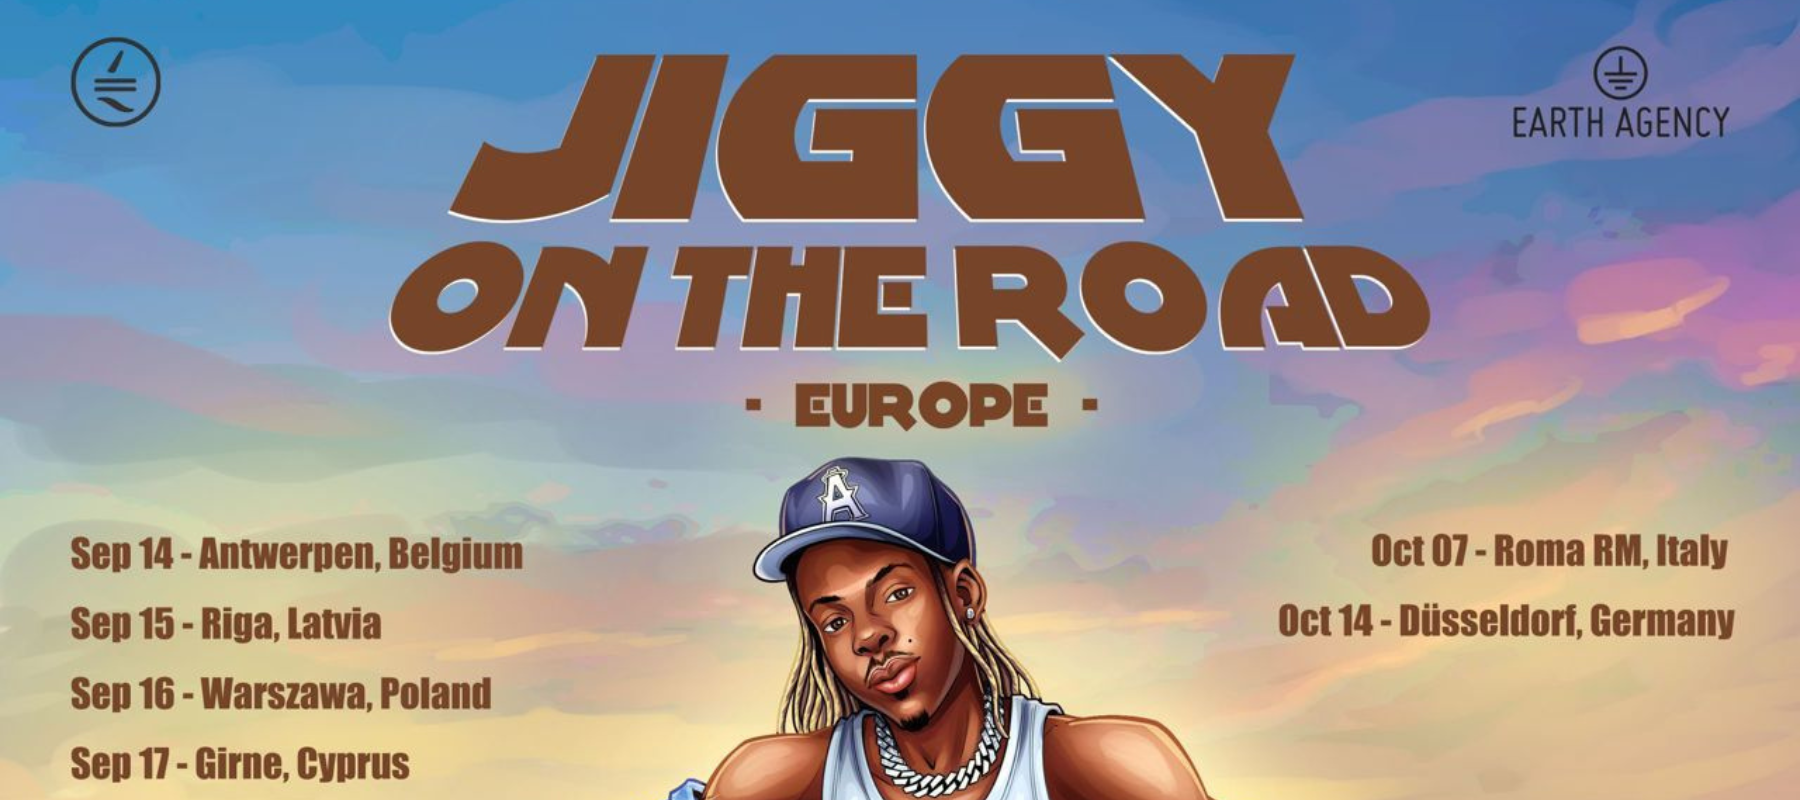 Young Jonn Announces ‘Jiggy on the Road’ European Tour